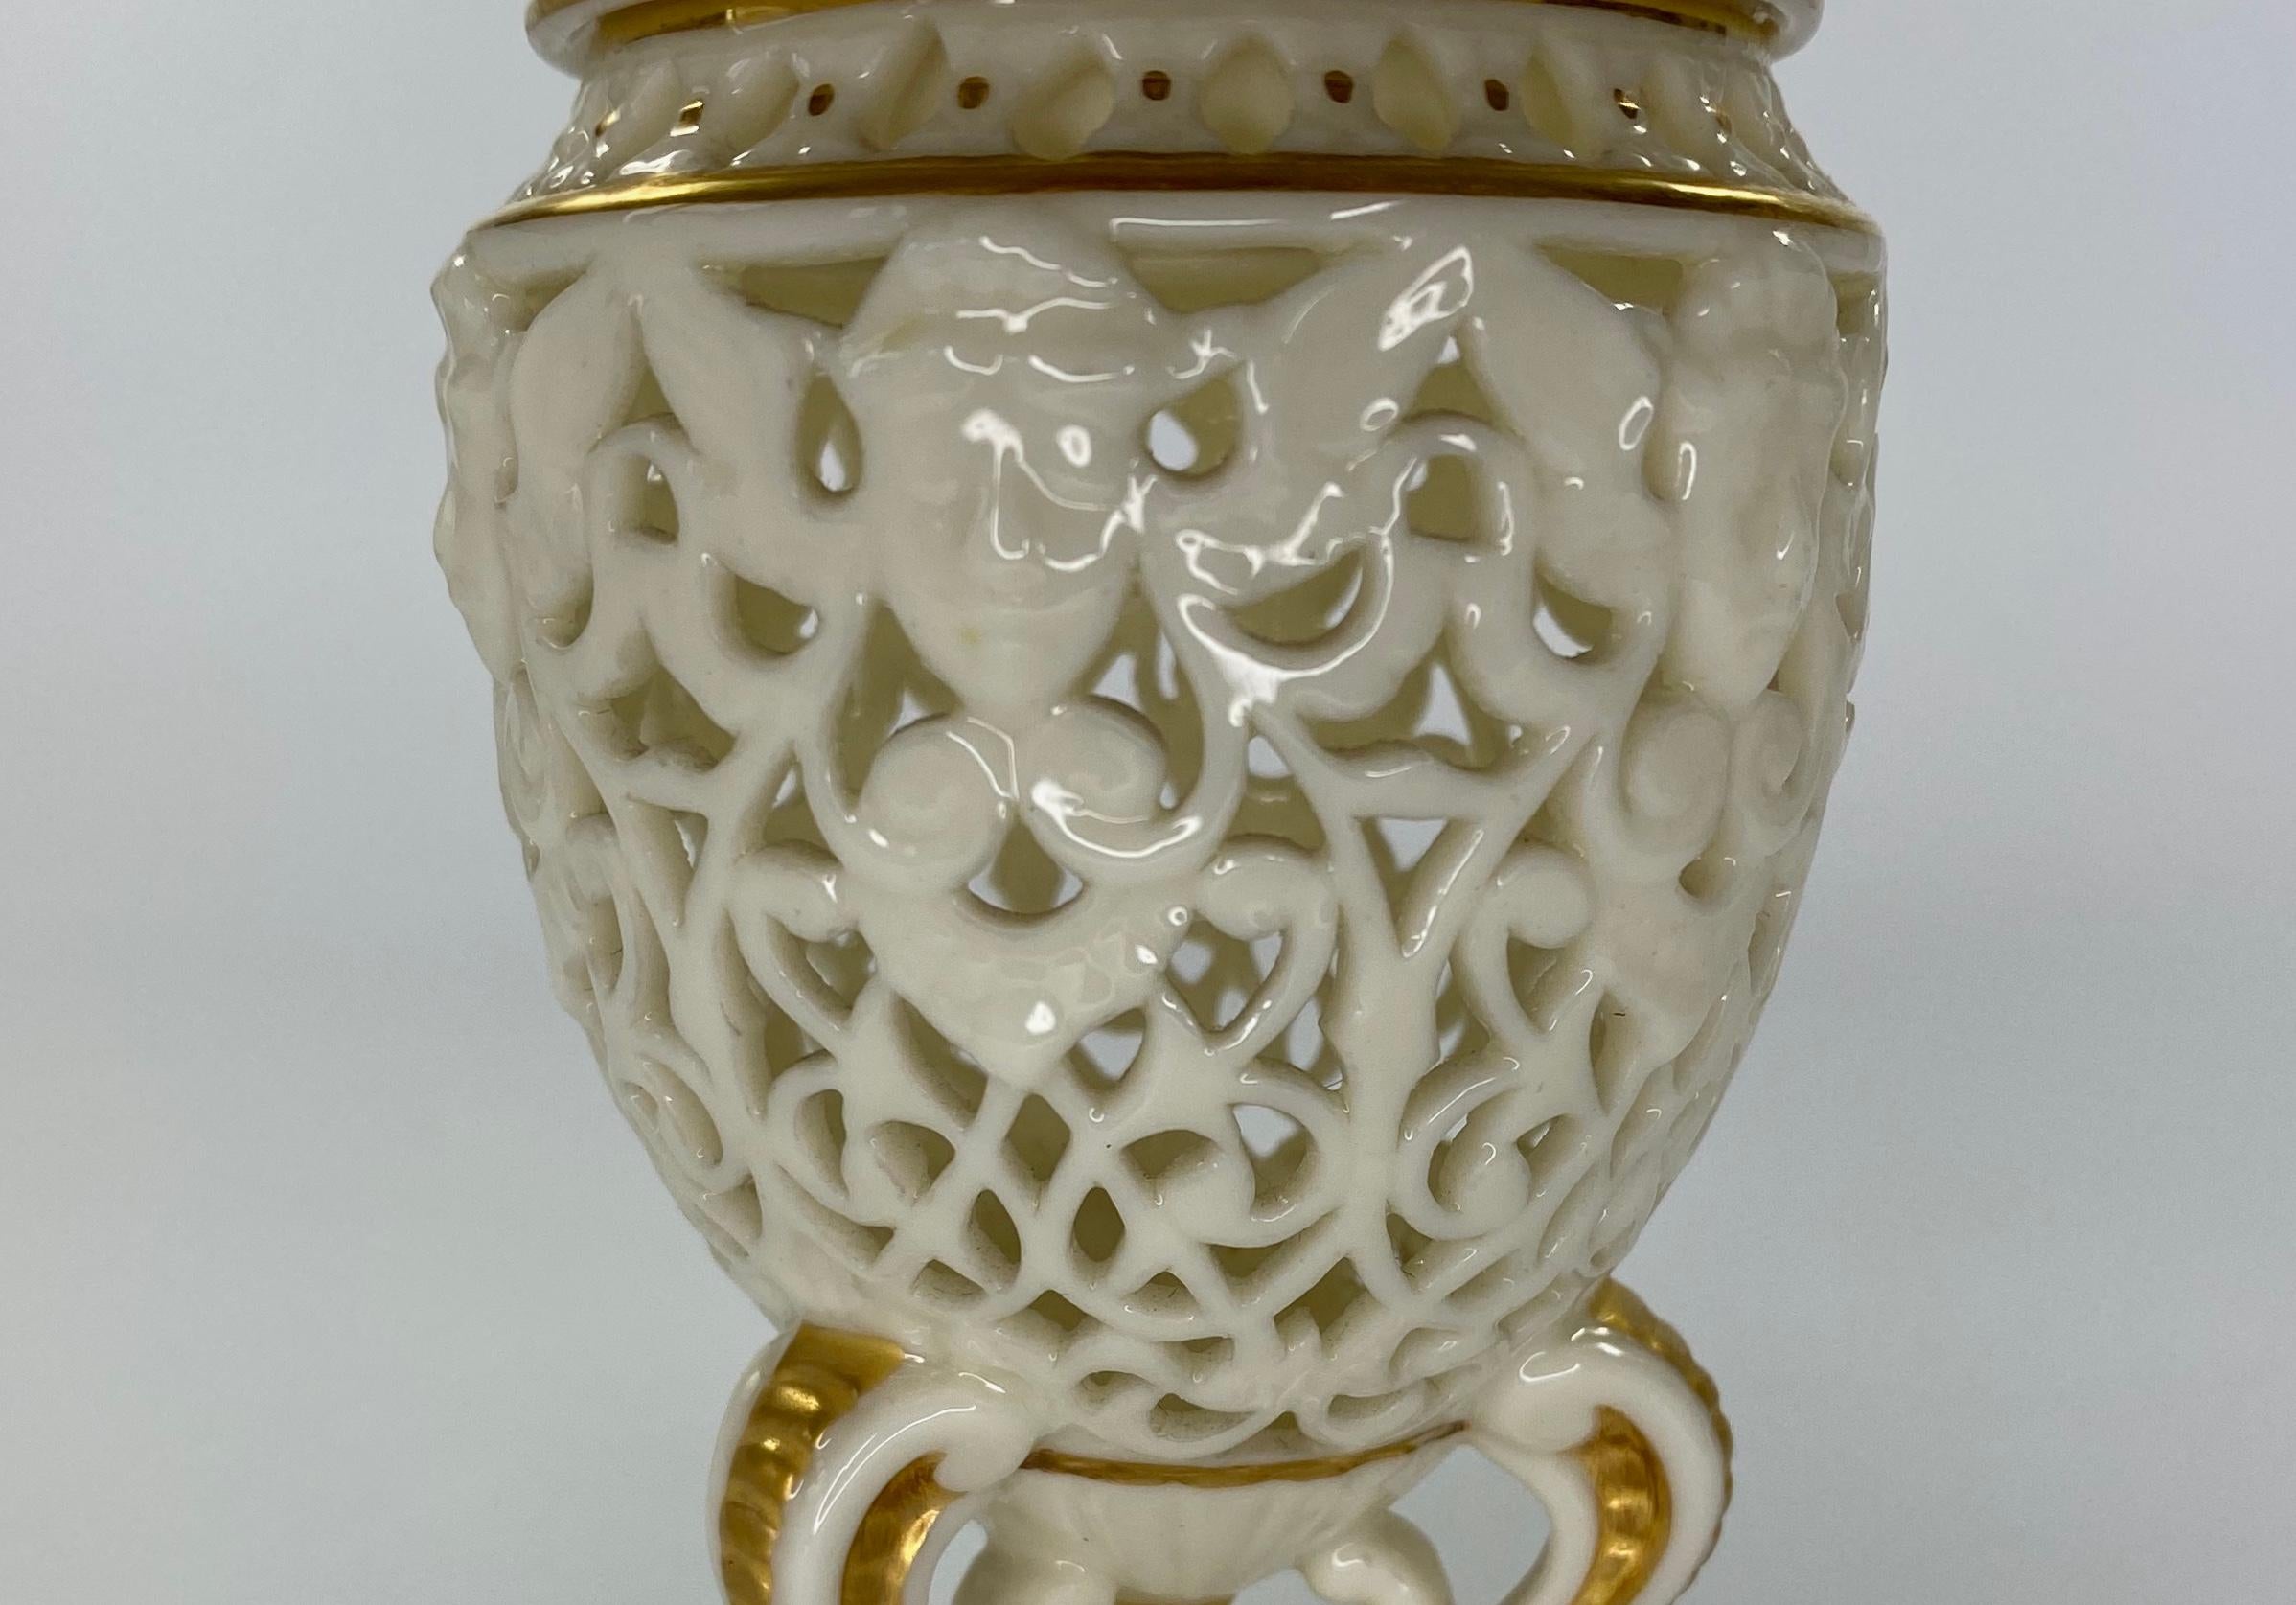 Fired Graingers Royal Worcester Porcelain Vase and Cover, c. 1890